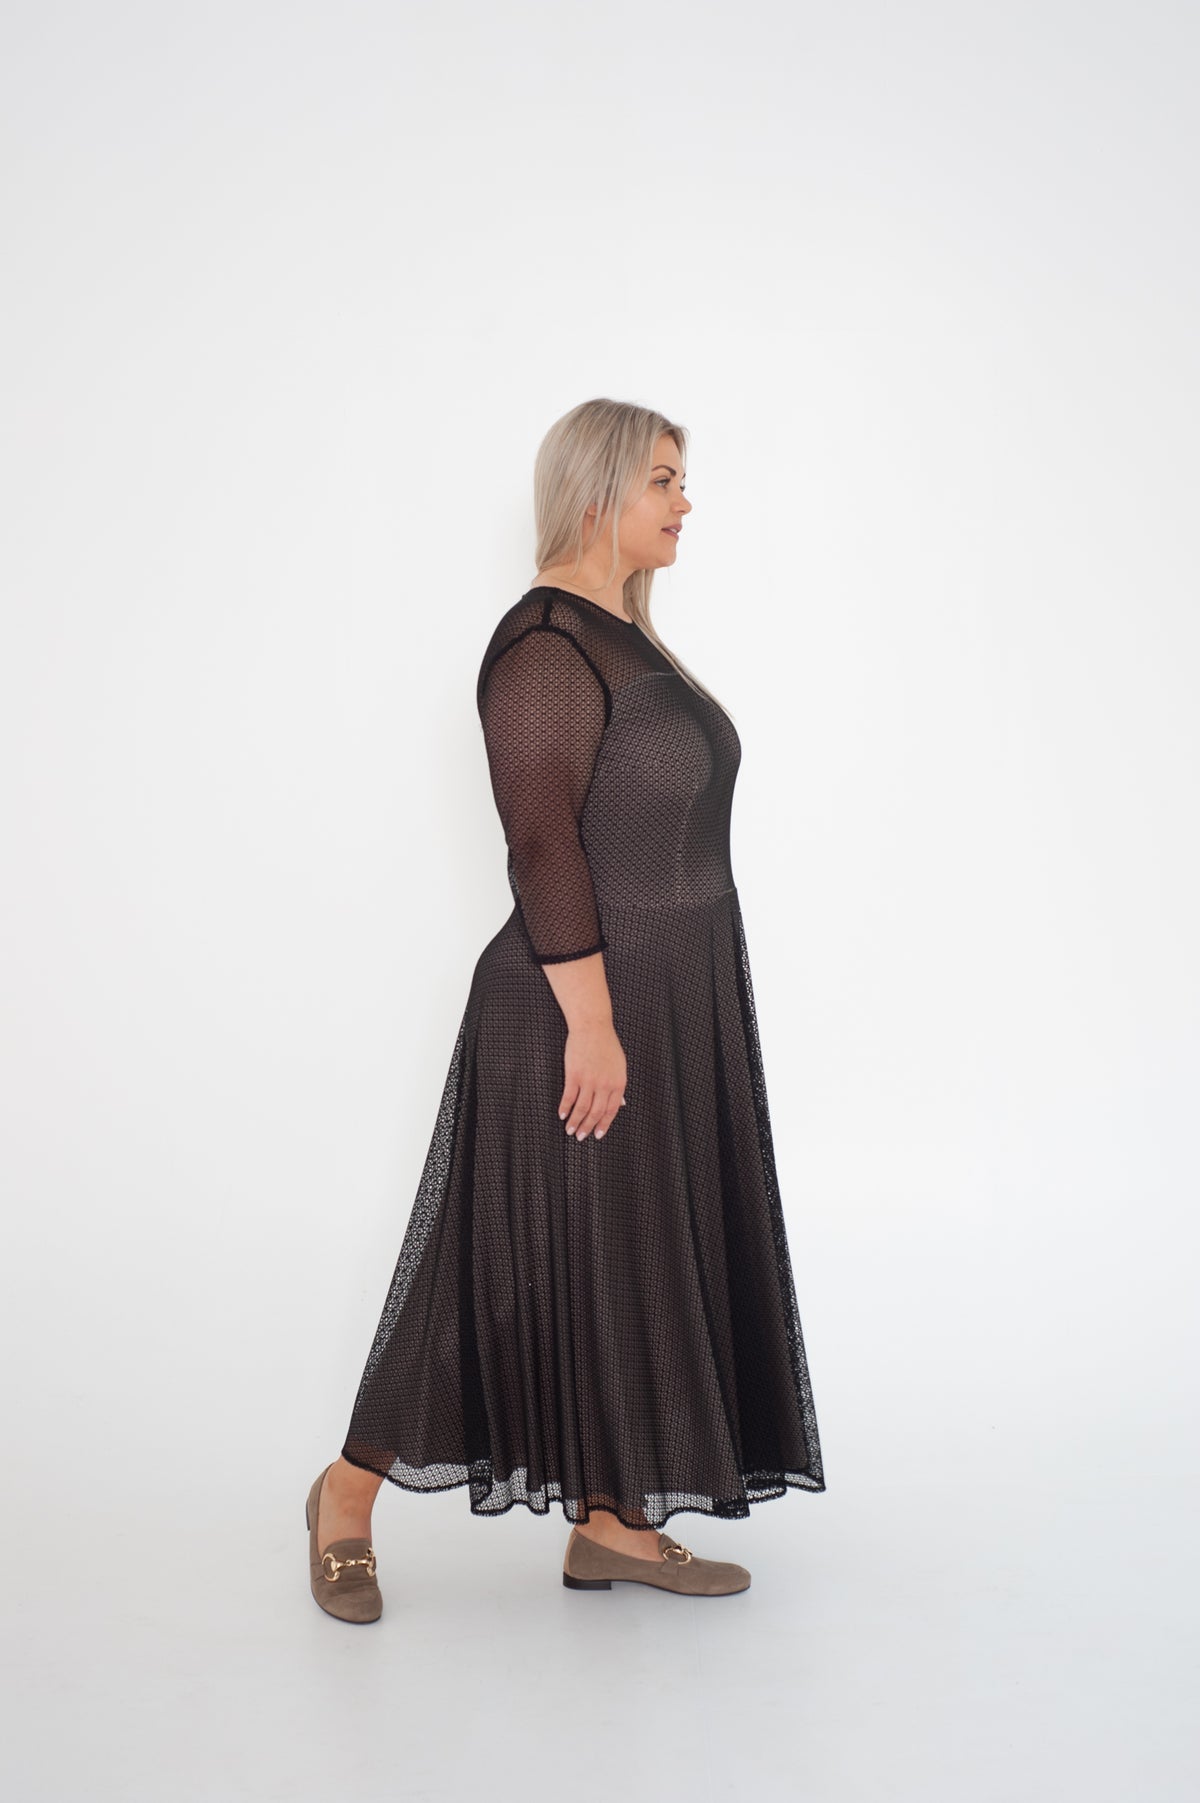 Black midi lace dress with beige lining